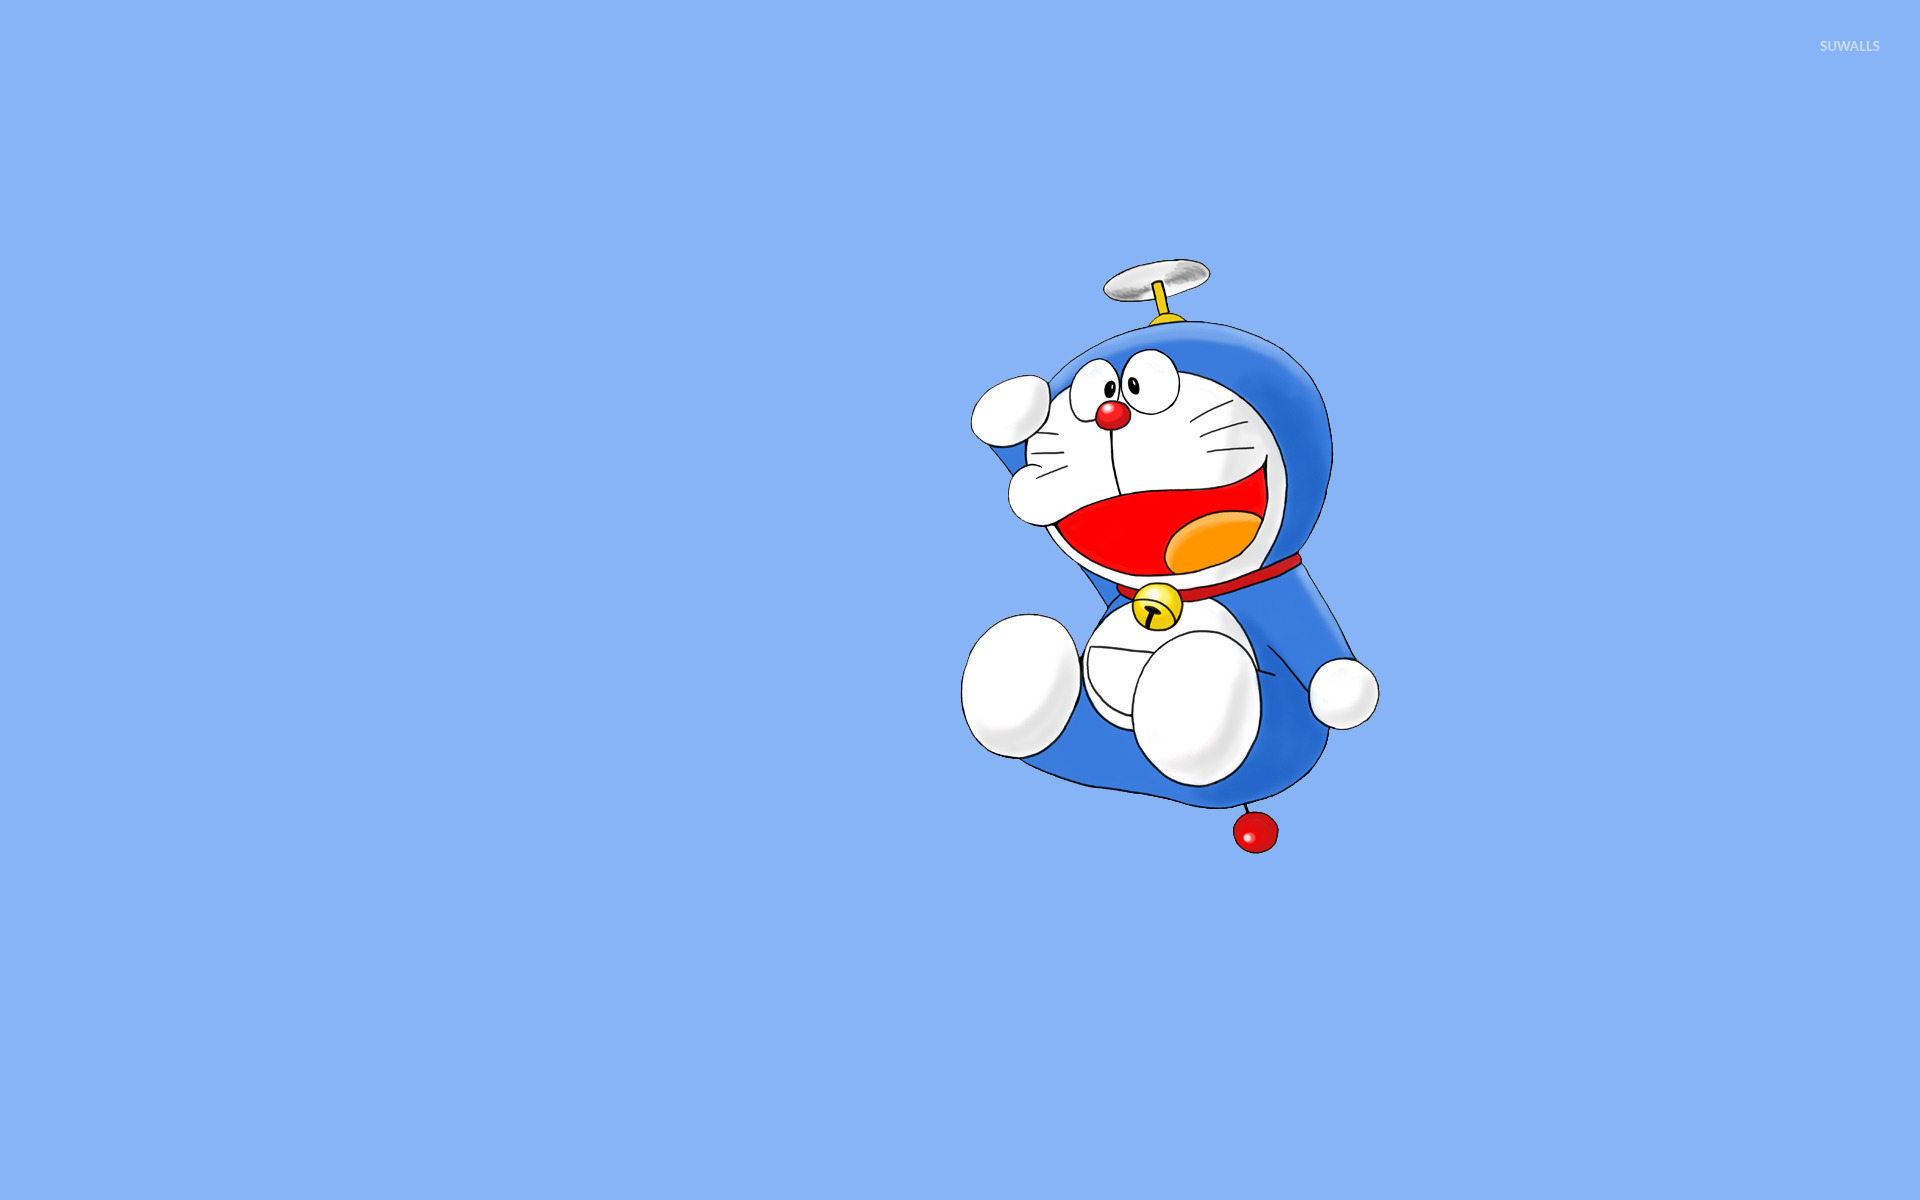 Doraemon Wallpapers Images, Photos, Reviews